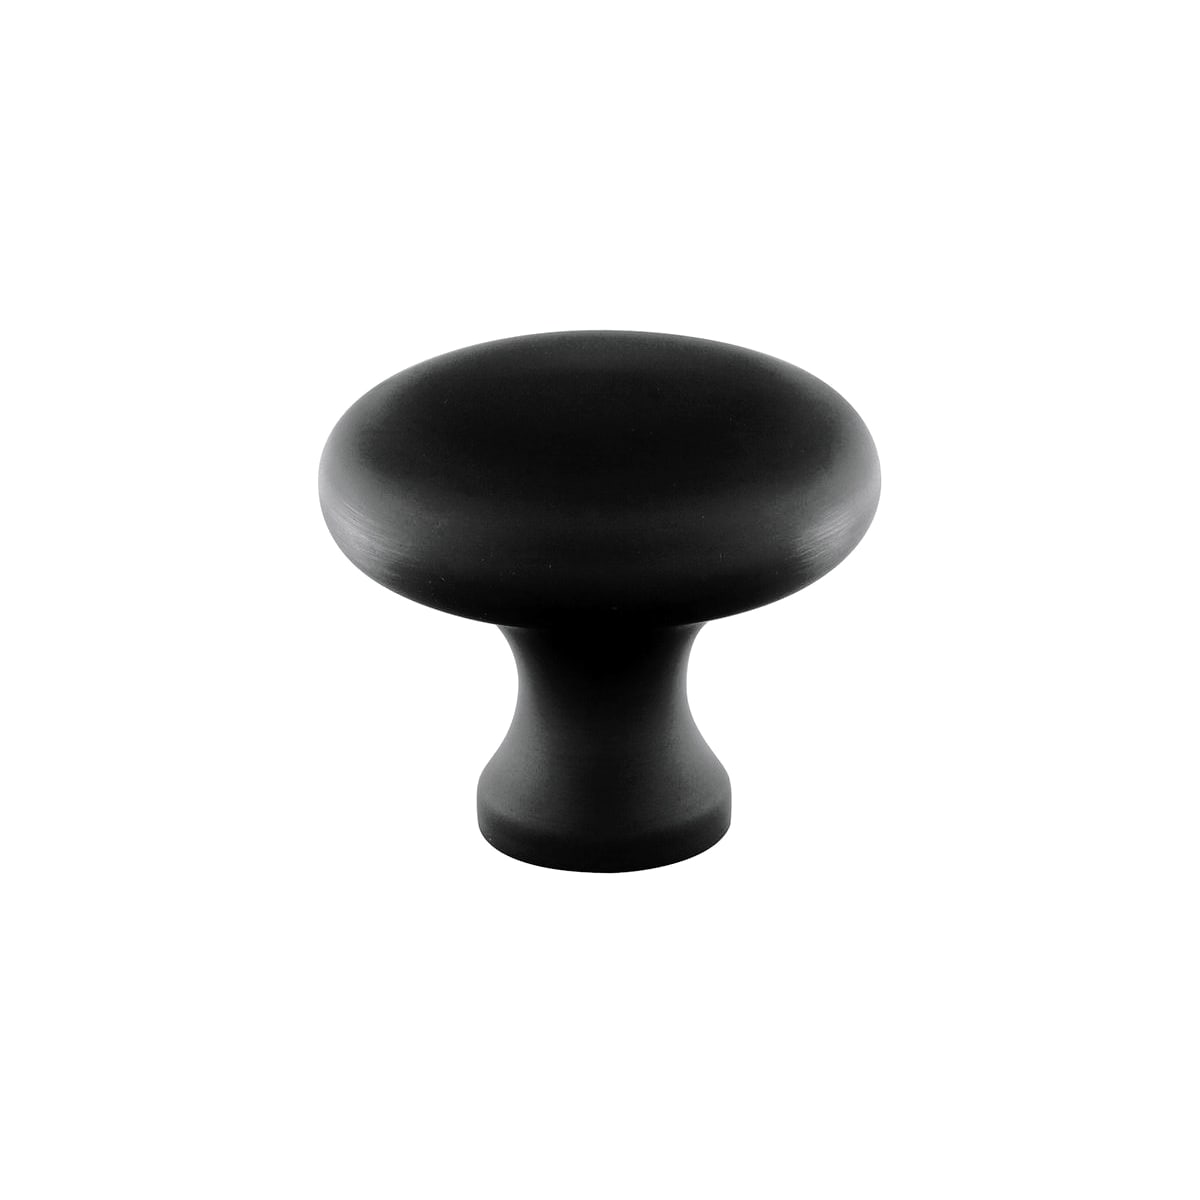 Solid black ebony knob